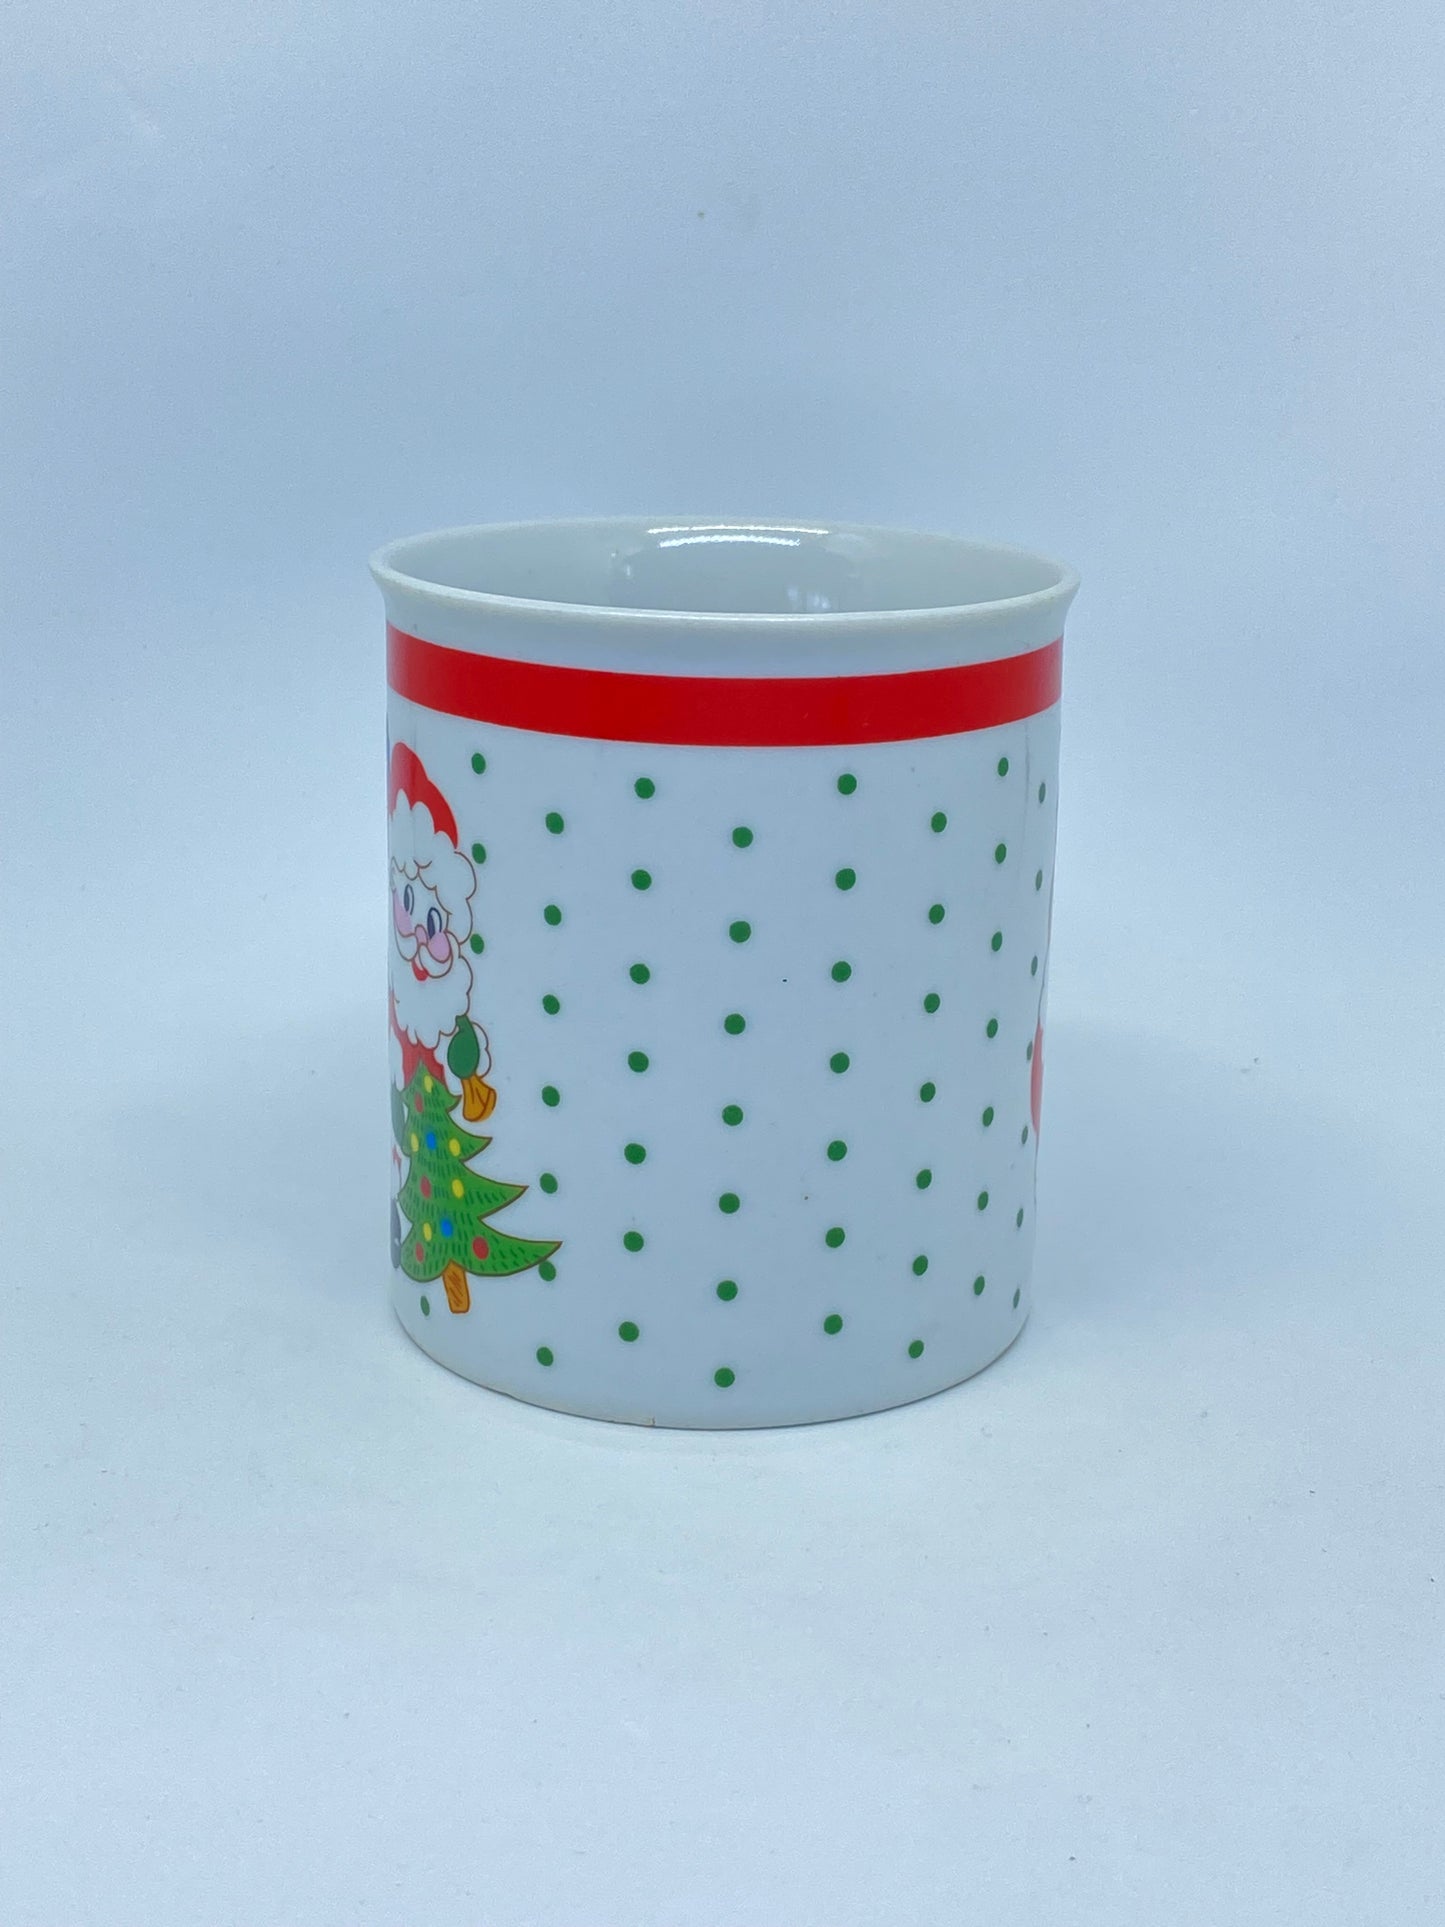 1980s Korean Kitschmas Christmas cup - Santa and his sack